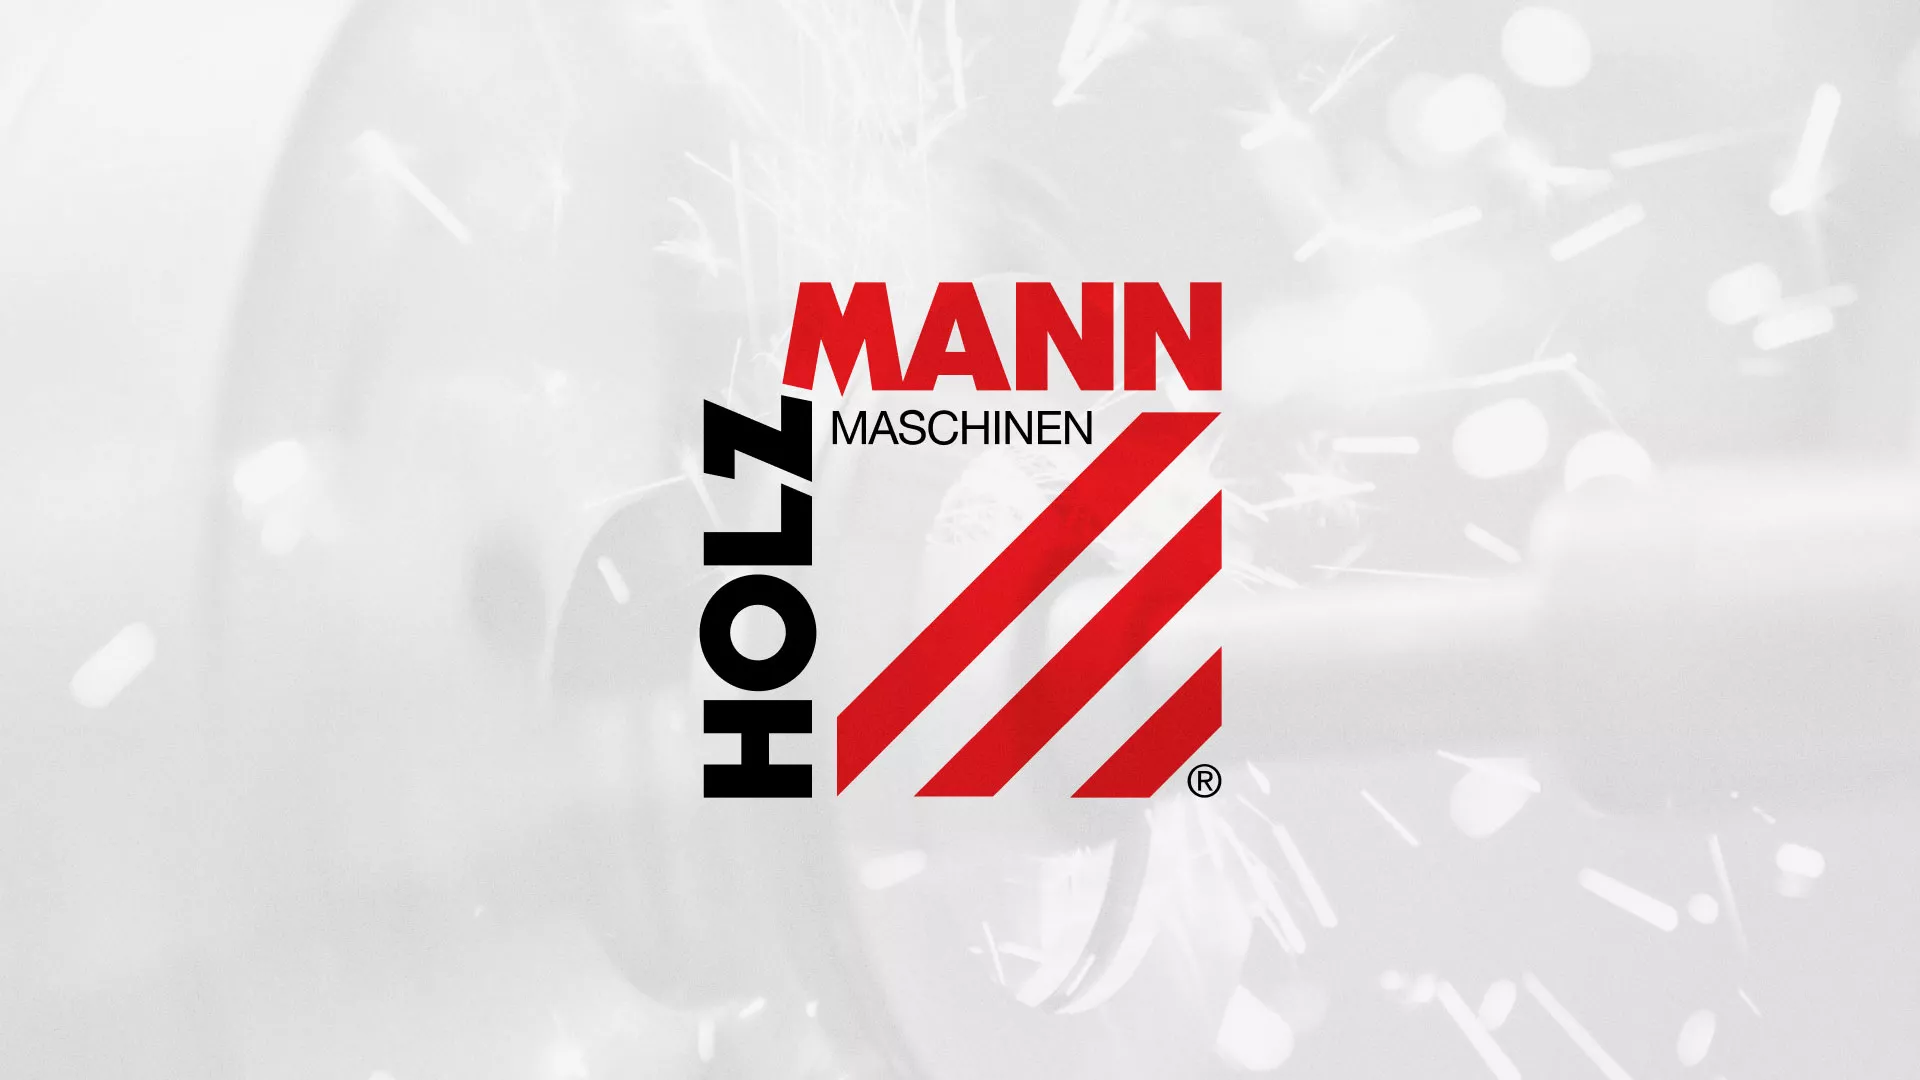 Создание сайта компании «HOLZMANN Maschinen GmbH» в Якутске